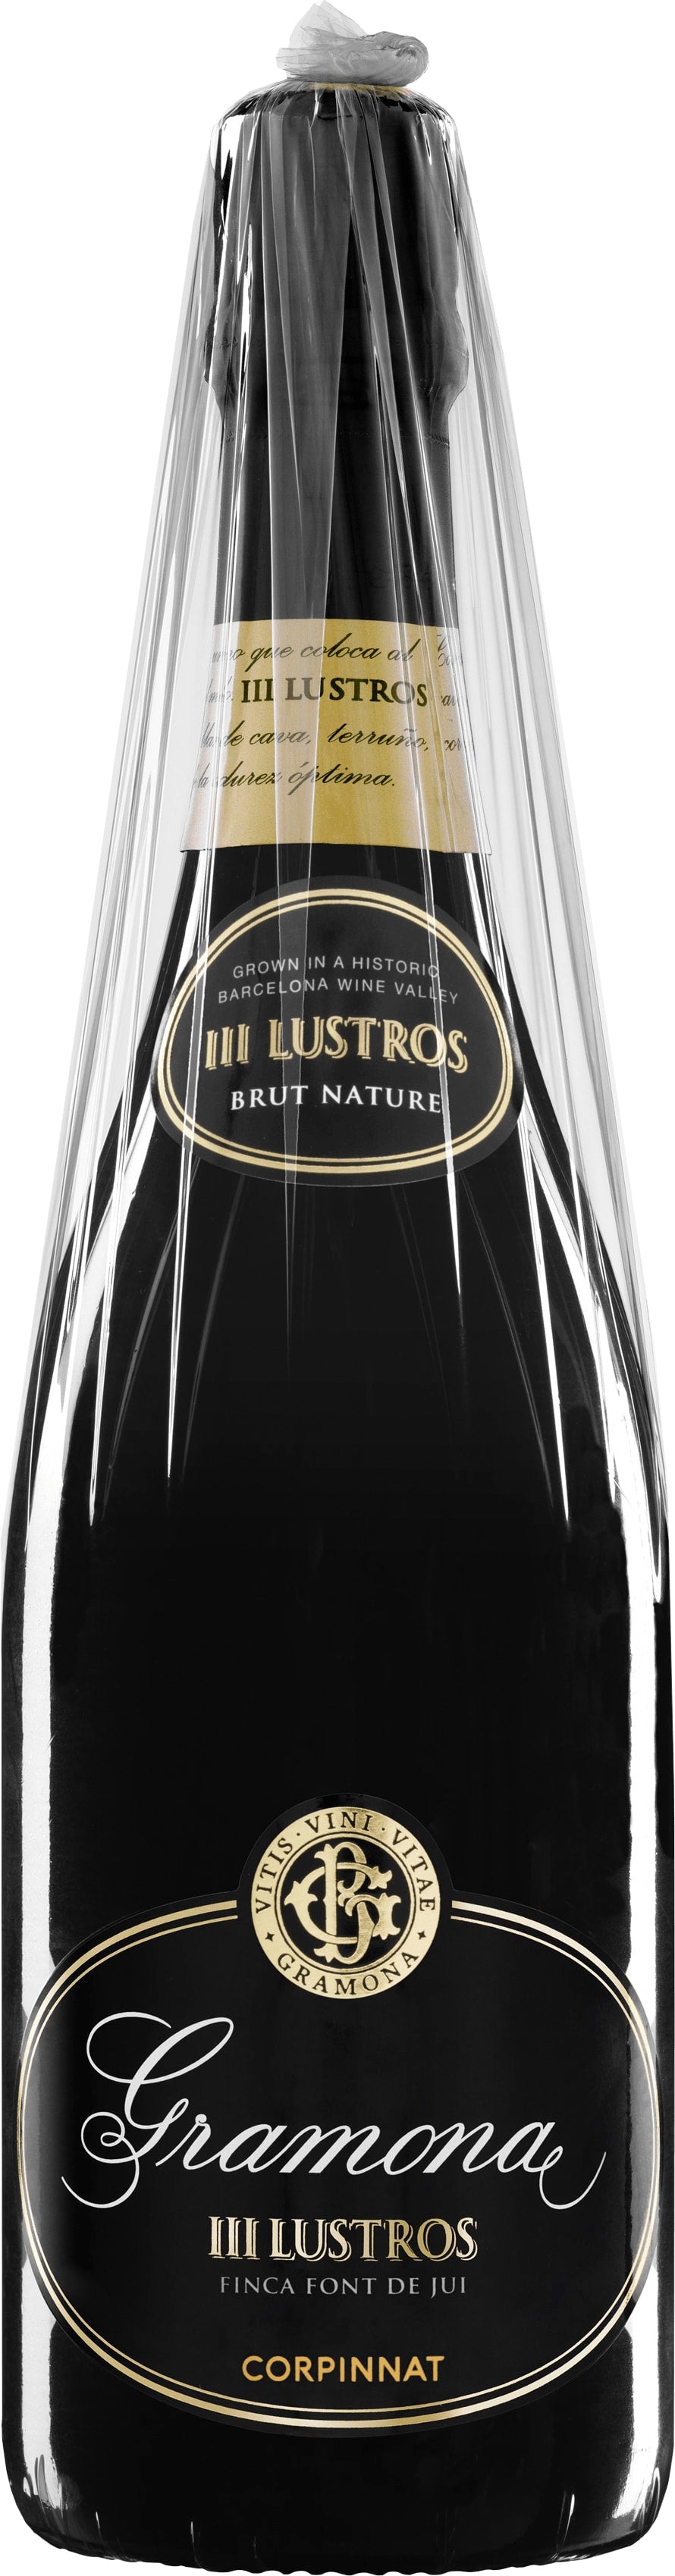 Gramona III Lustros Brut Nature Organic 2015 75cl - Buy Gramona Wines from GREAT WINES DIRECT wine shop